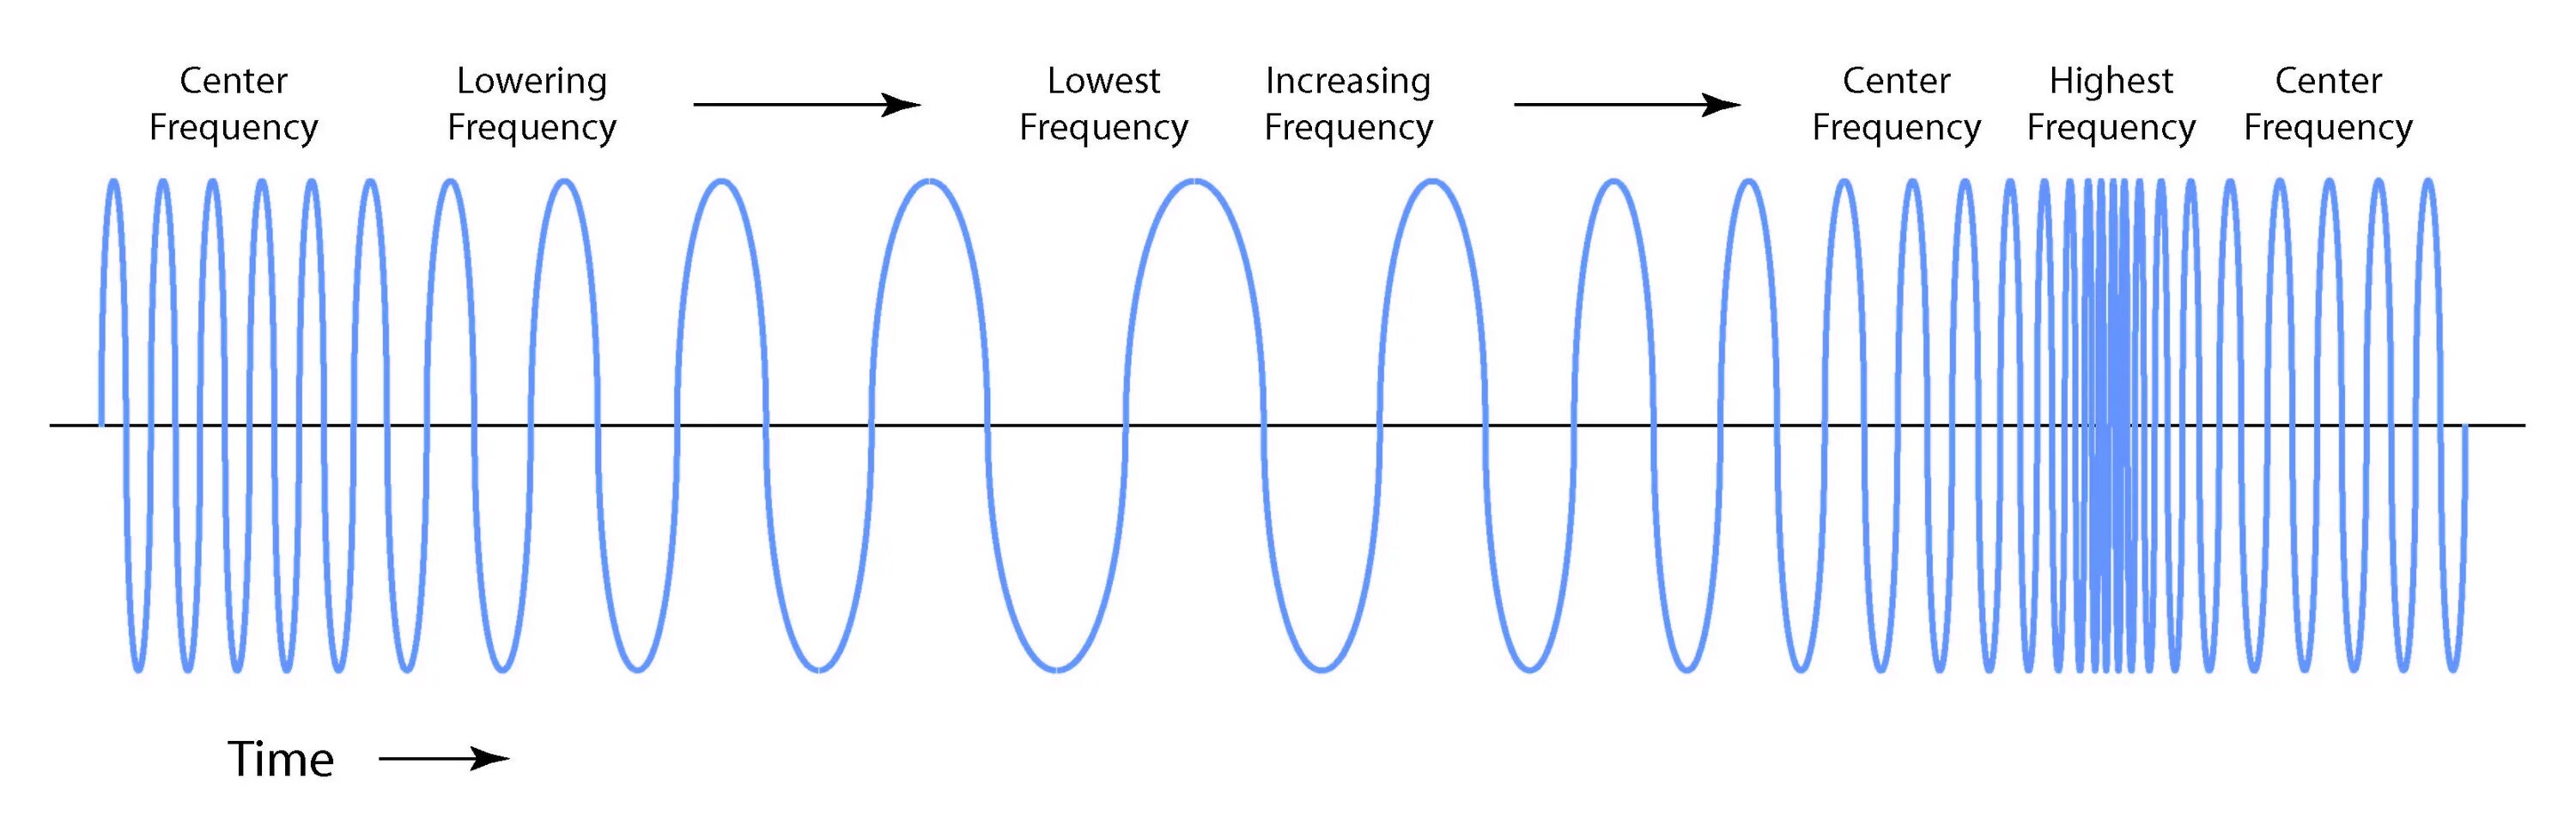 Ask frequency. Частота звука. GFSK модуляция. BFO Beat Frequency oscillation метод биений. Частотно временная матрица сигналов OFDM.